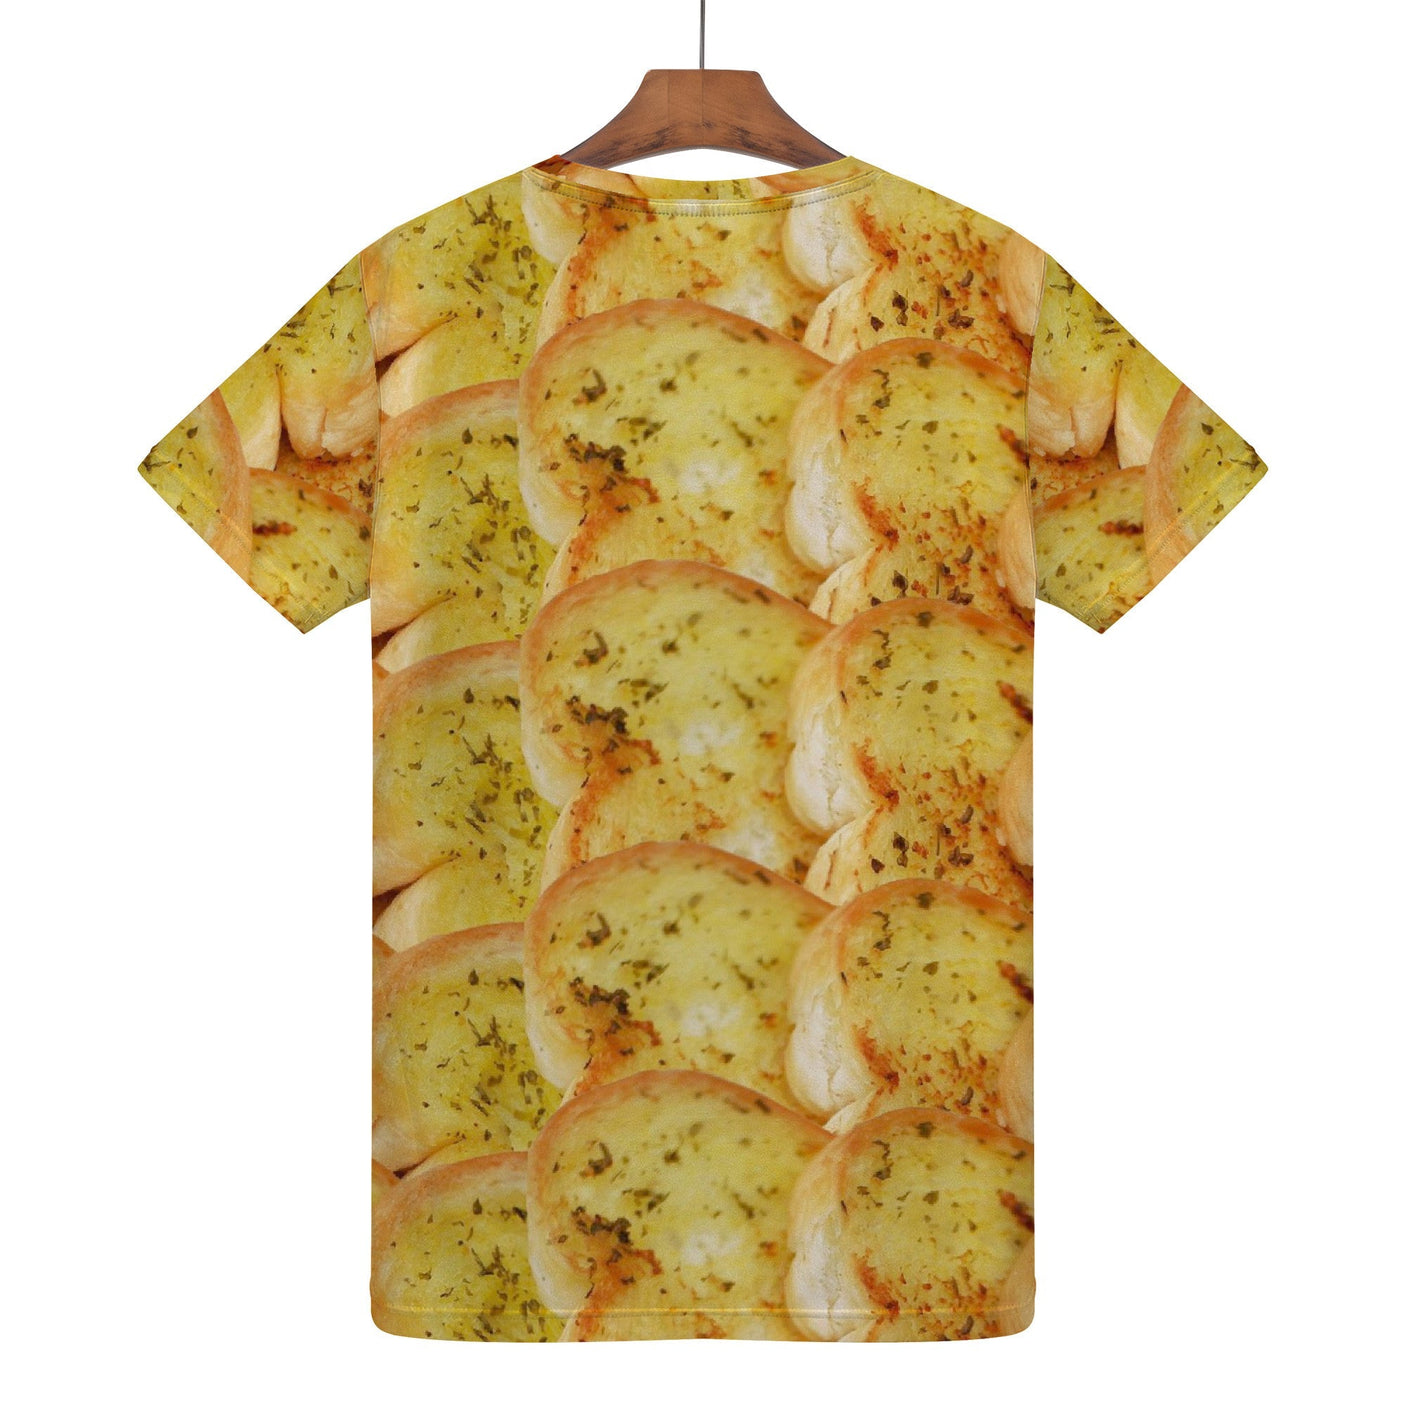 Garlic Bread Shirt | AOP 3D Tee Shirts - Random Galaxy Official